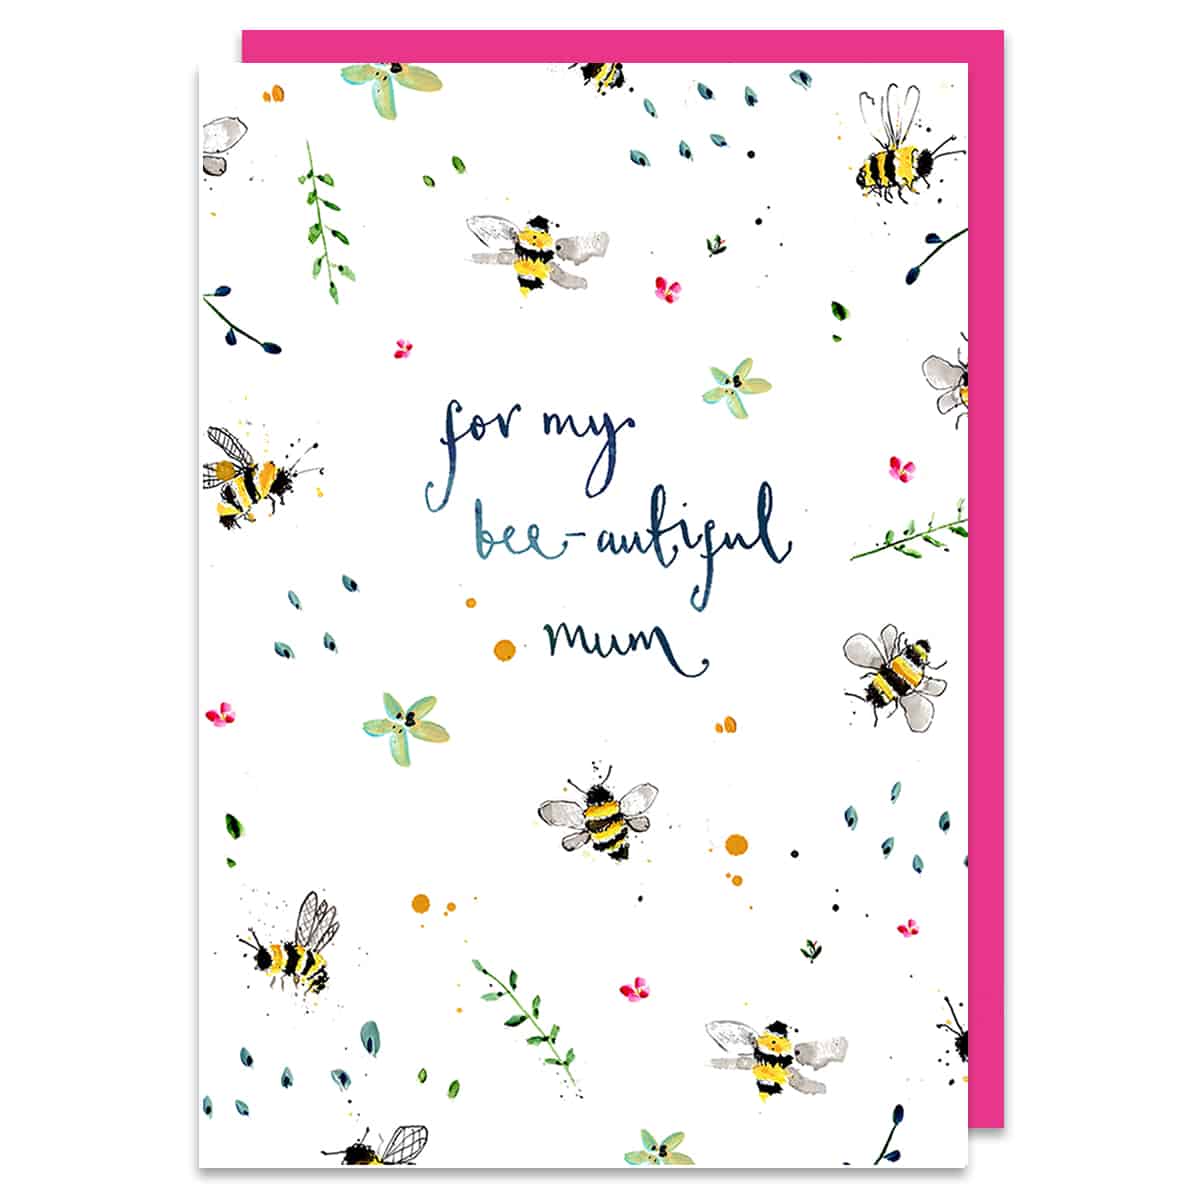 bee-autiful mum by louise mulgrew